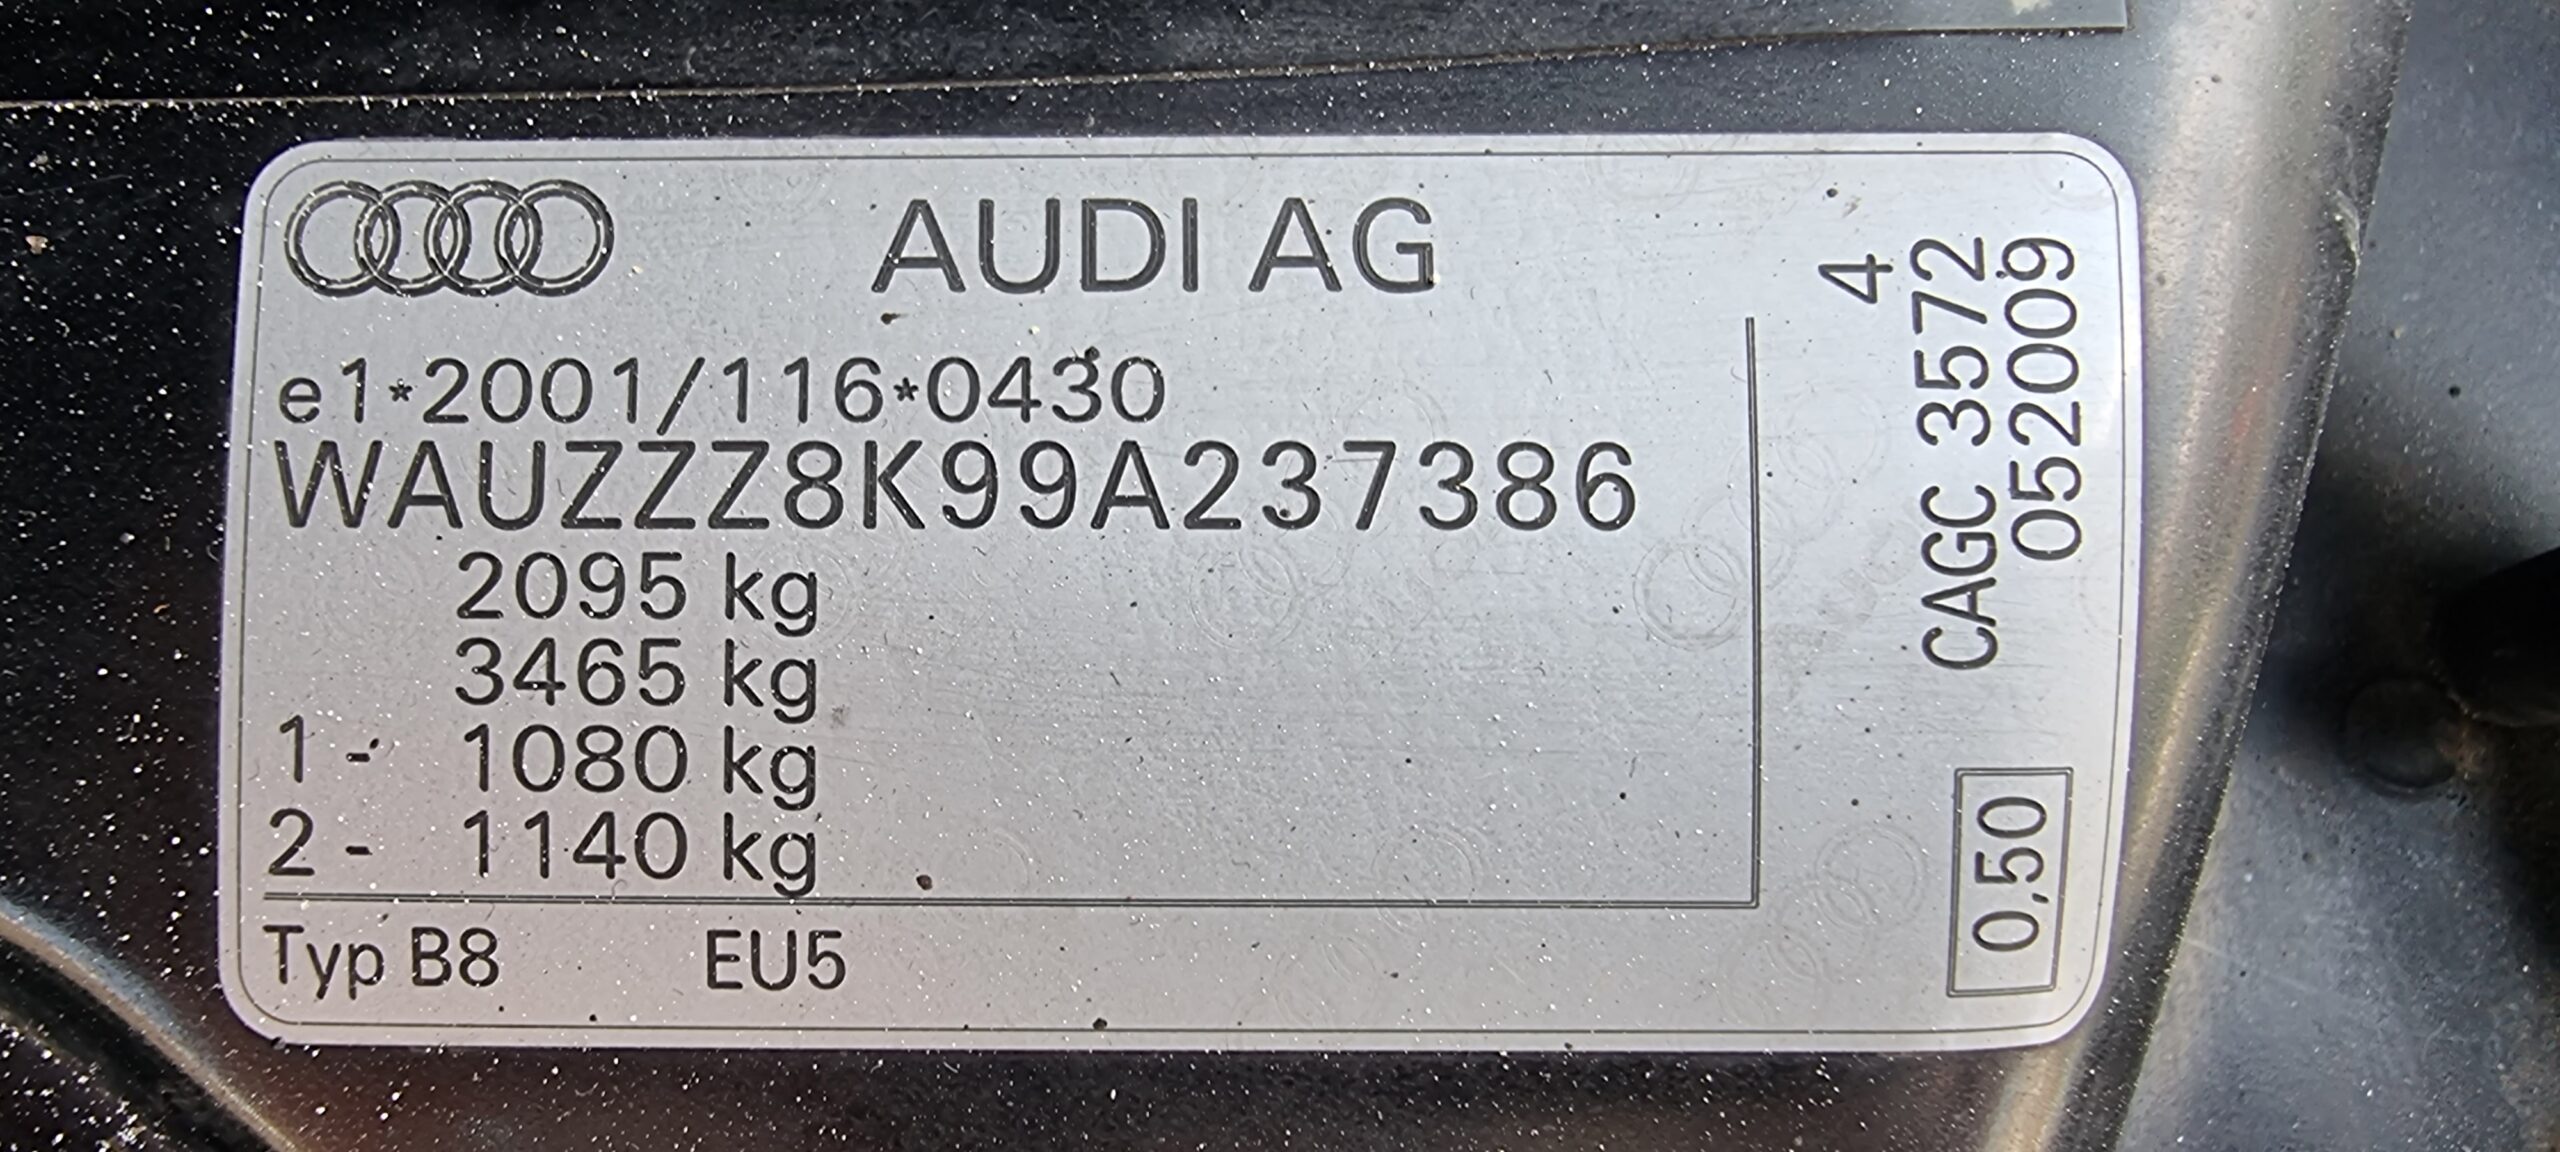 AUDI A4 S-LINE, 2.0 TDI, EURO 5, AN 2009